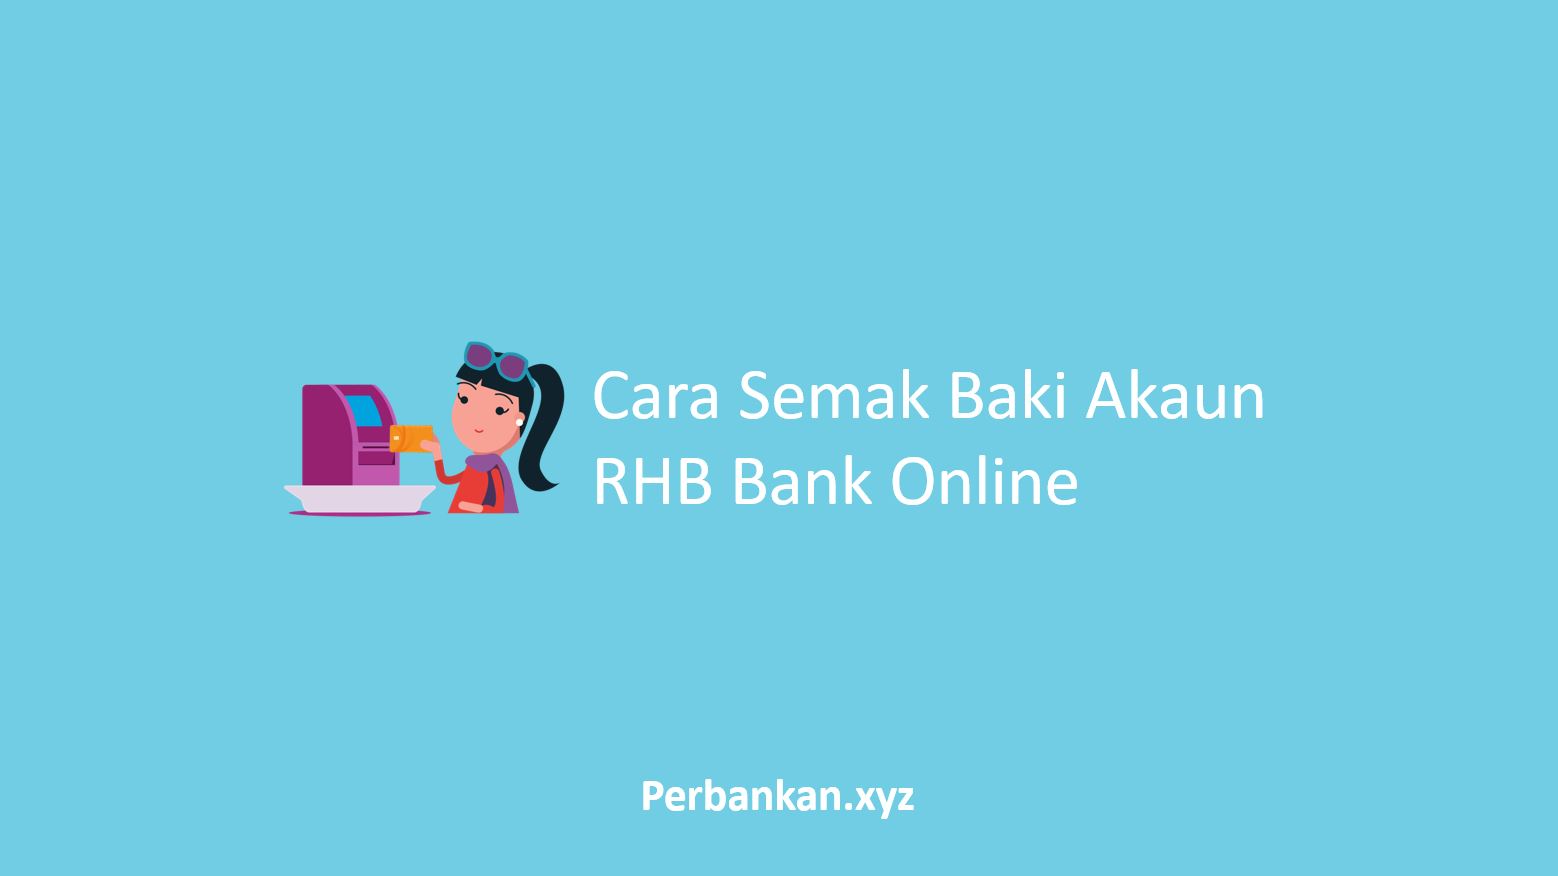 Cara Semak Baki Akaun RHB Bank Online